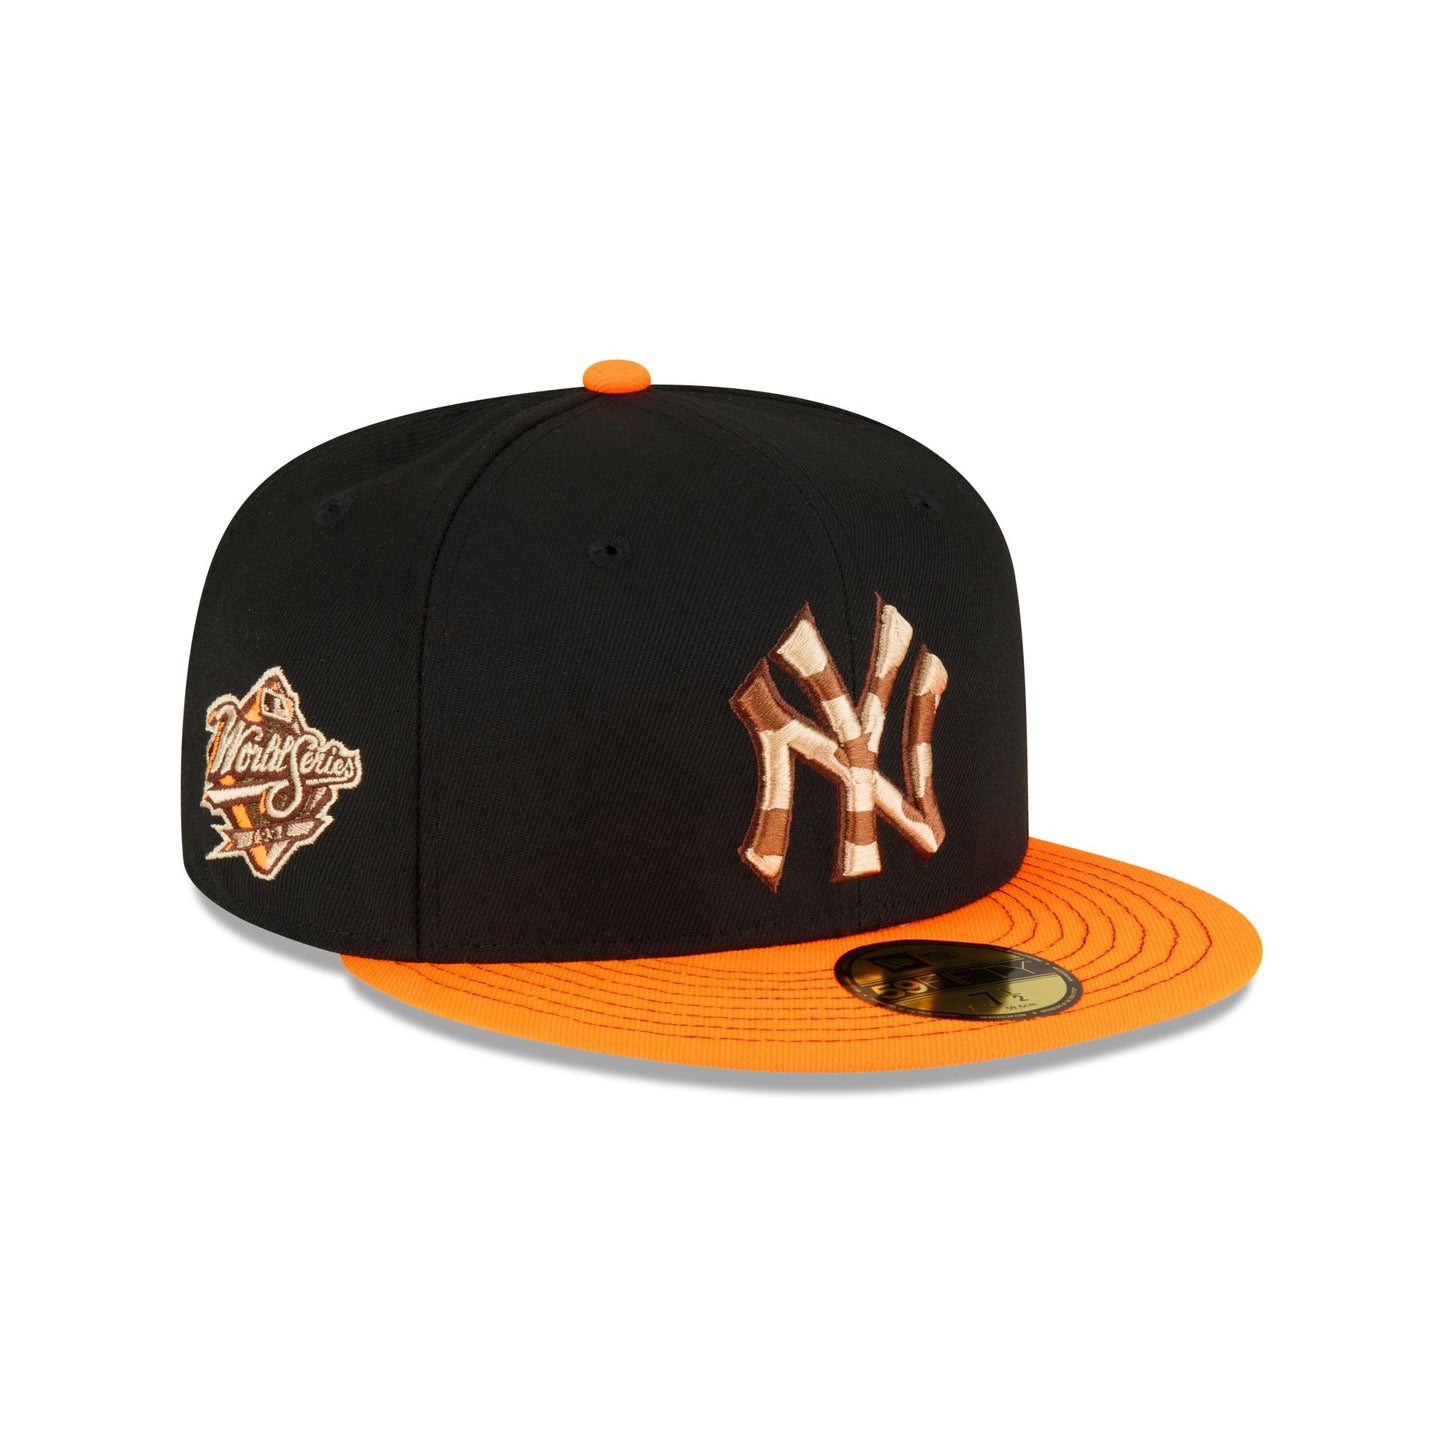 Orange New 59FIFTY Era York Fitted Visor Just – Hat New Yankees Cap Caps